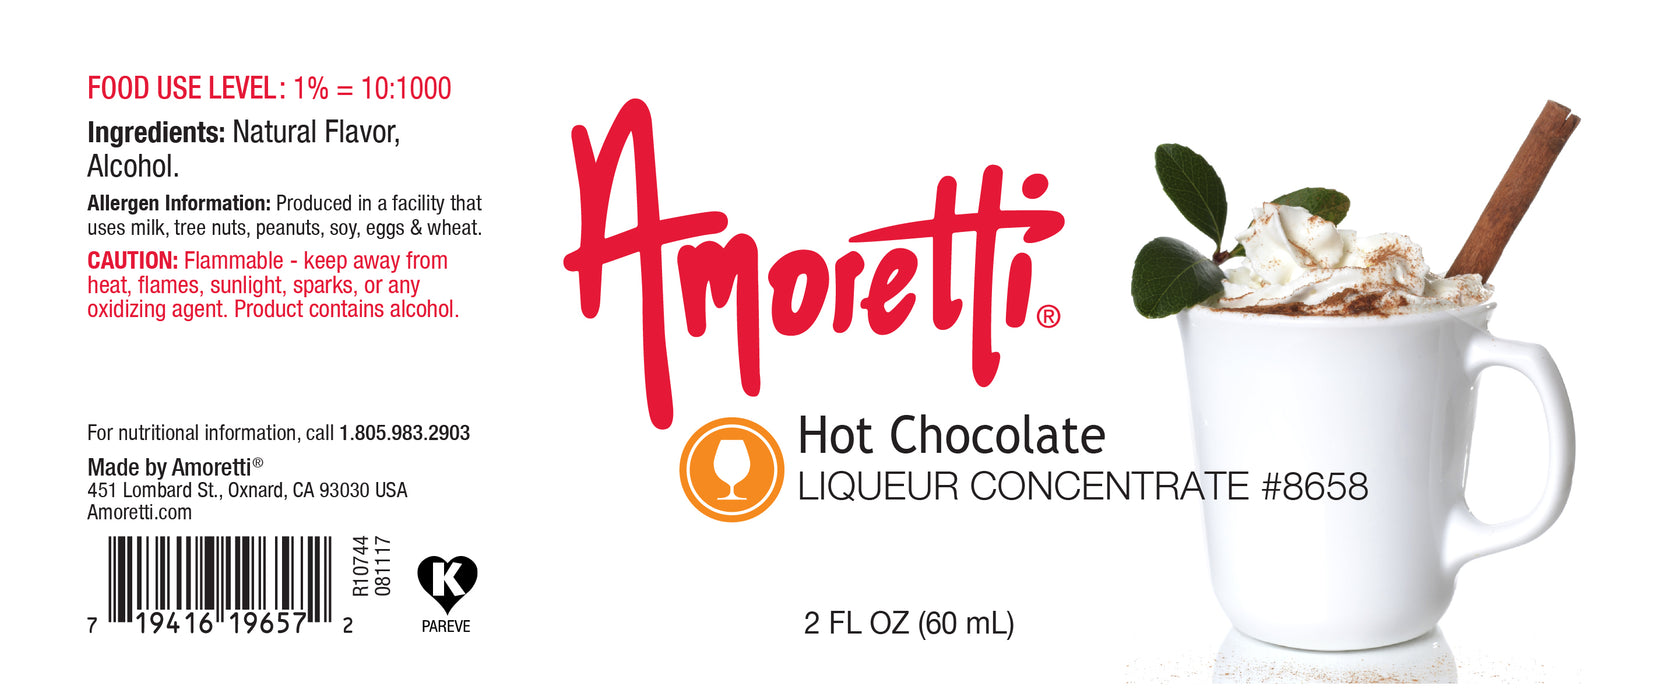 Hot Chocolate Liqueur Concentrate